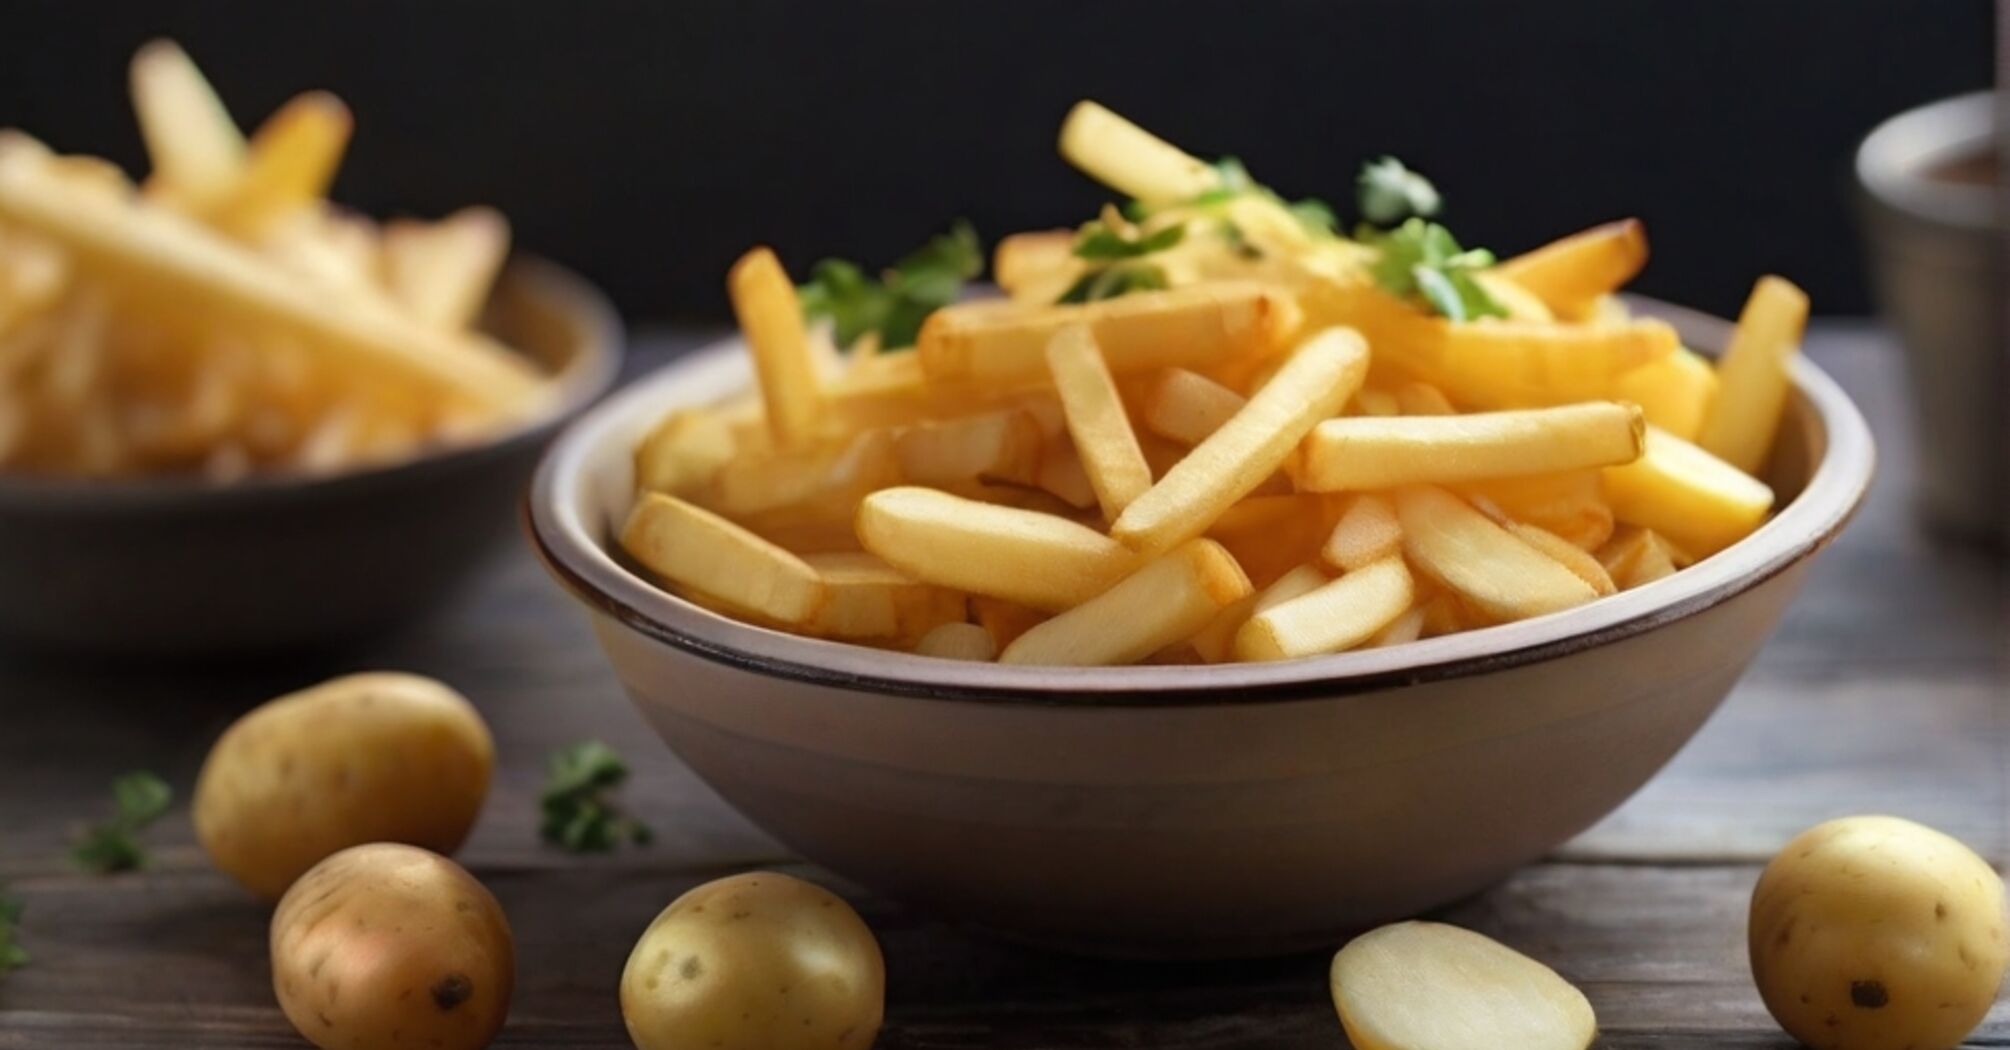 When potatoes become a health hazard